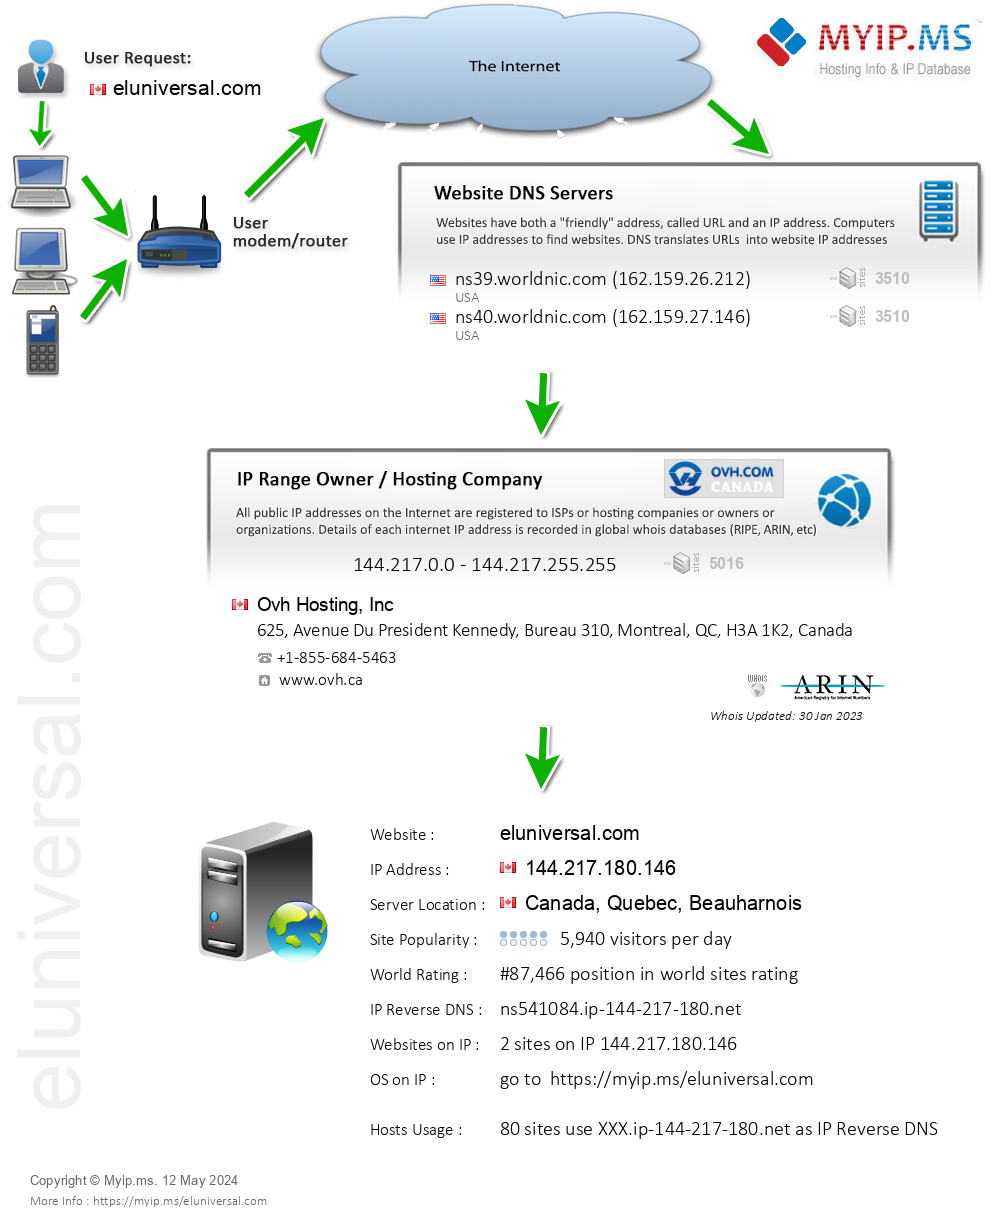 Eluniversal.com - Website Hosting Visual IP Diagram